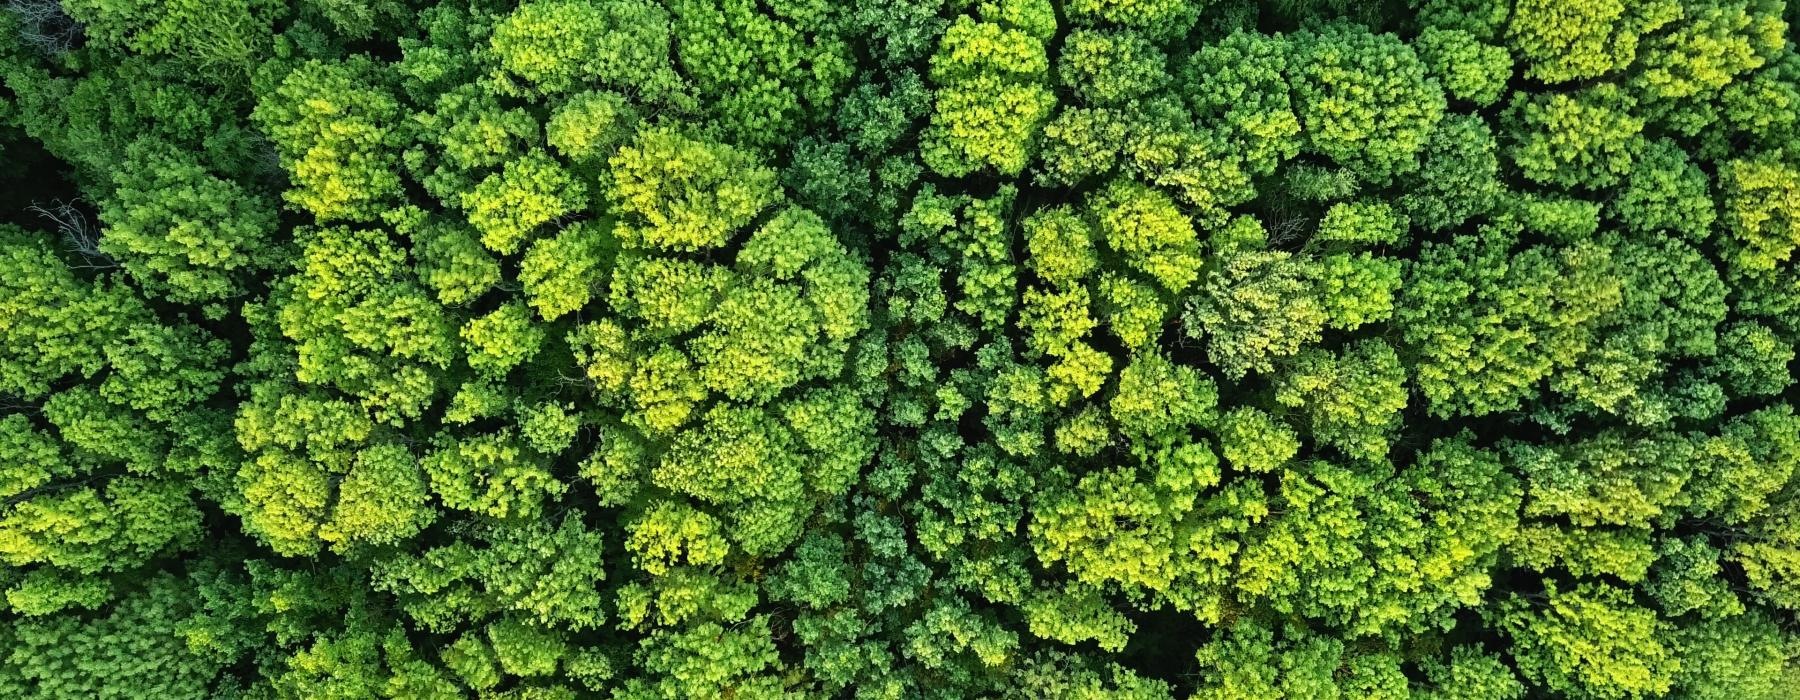 overhead shot of dense green trees